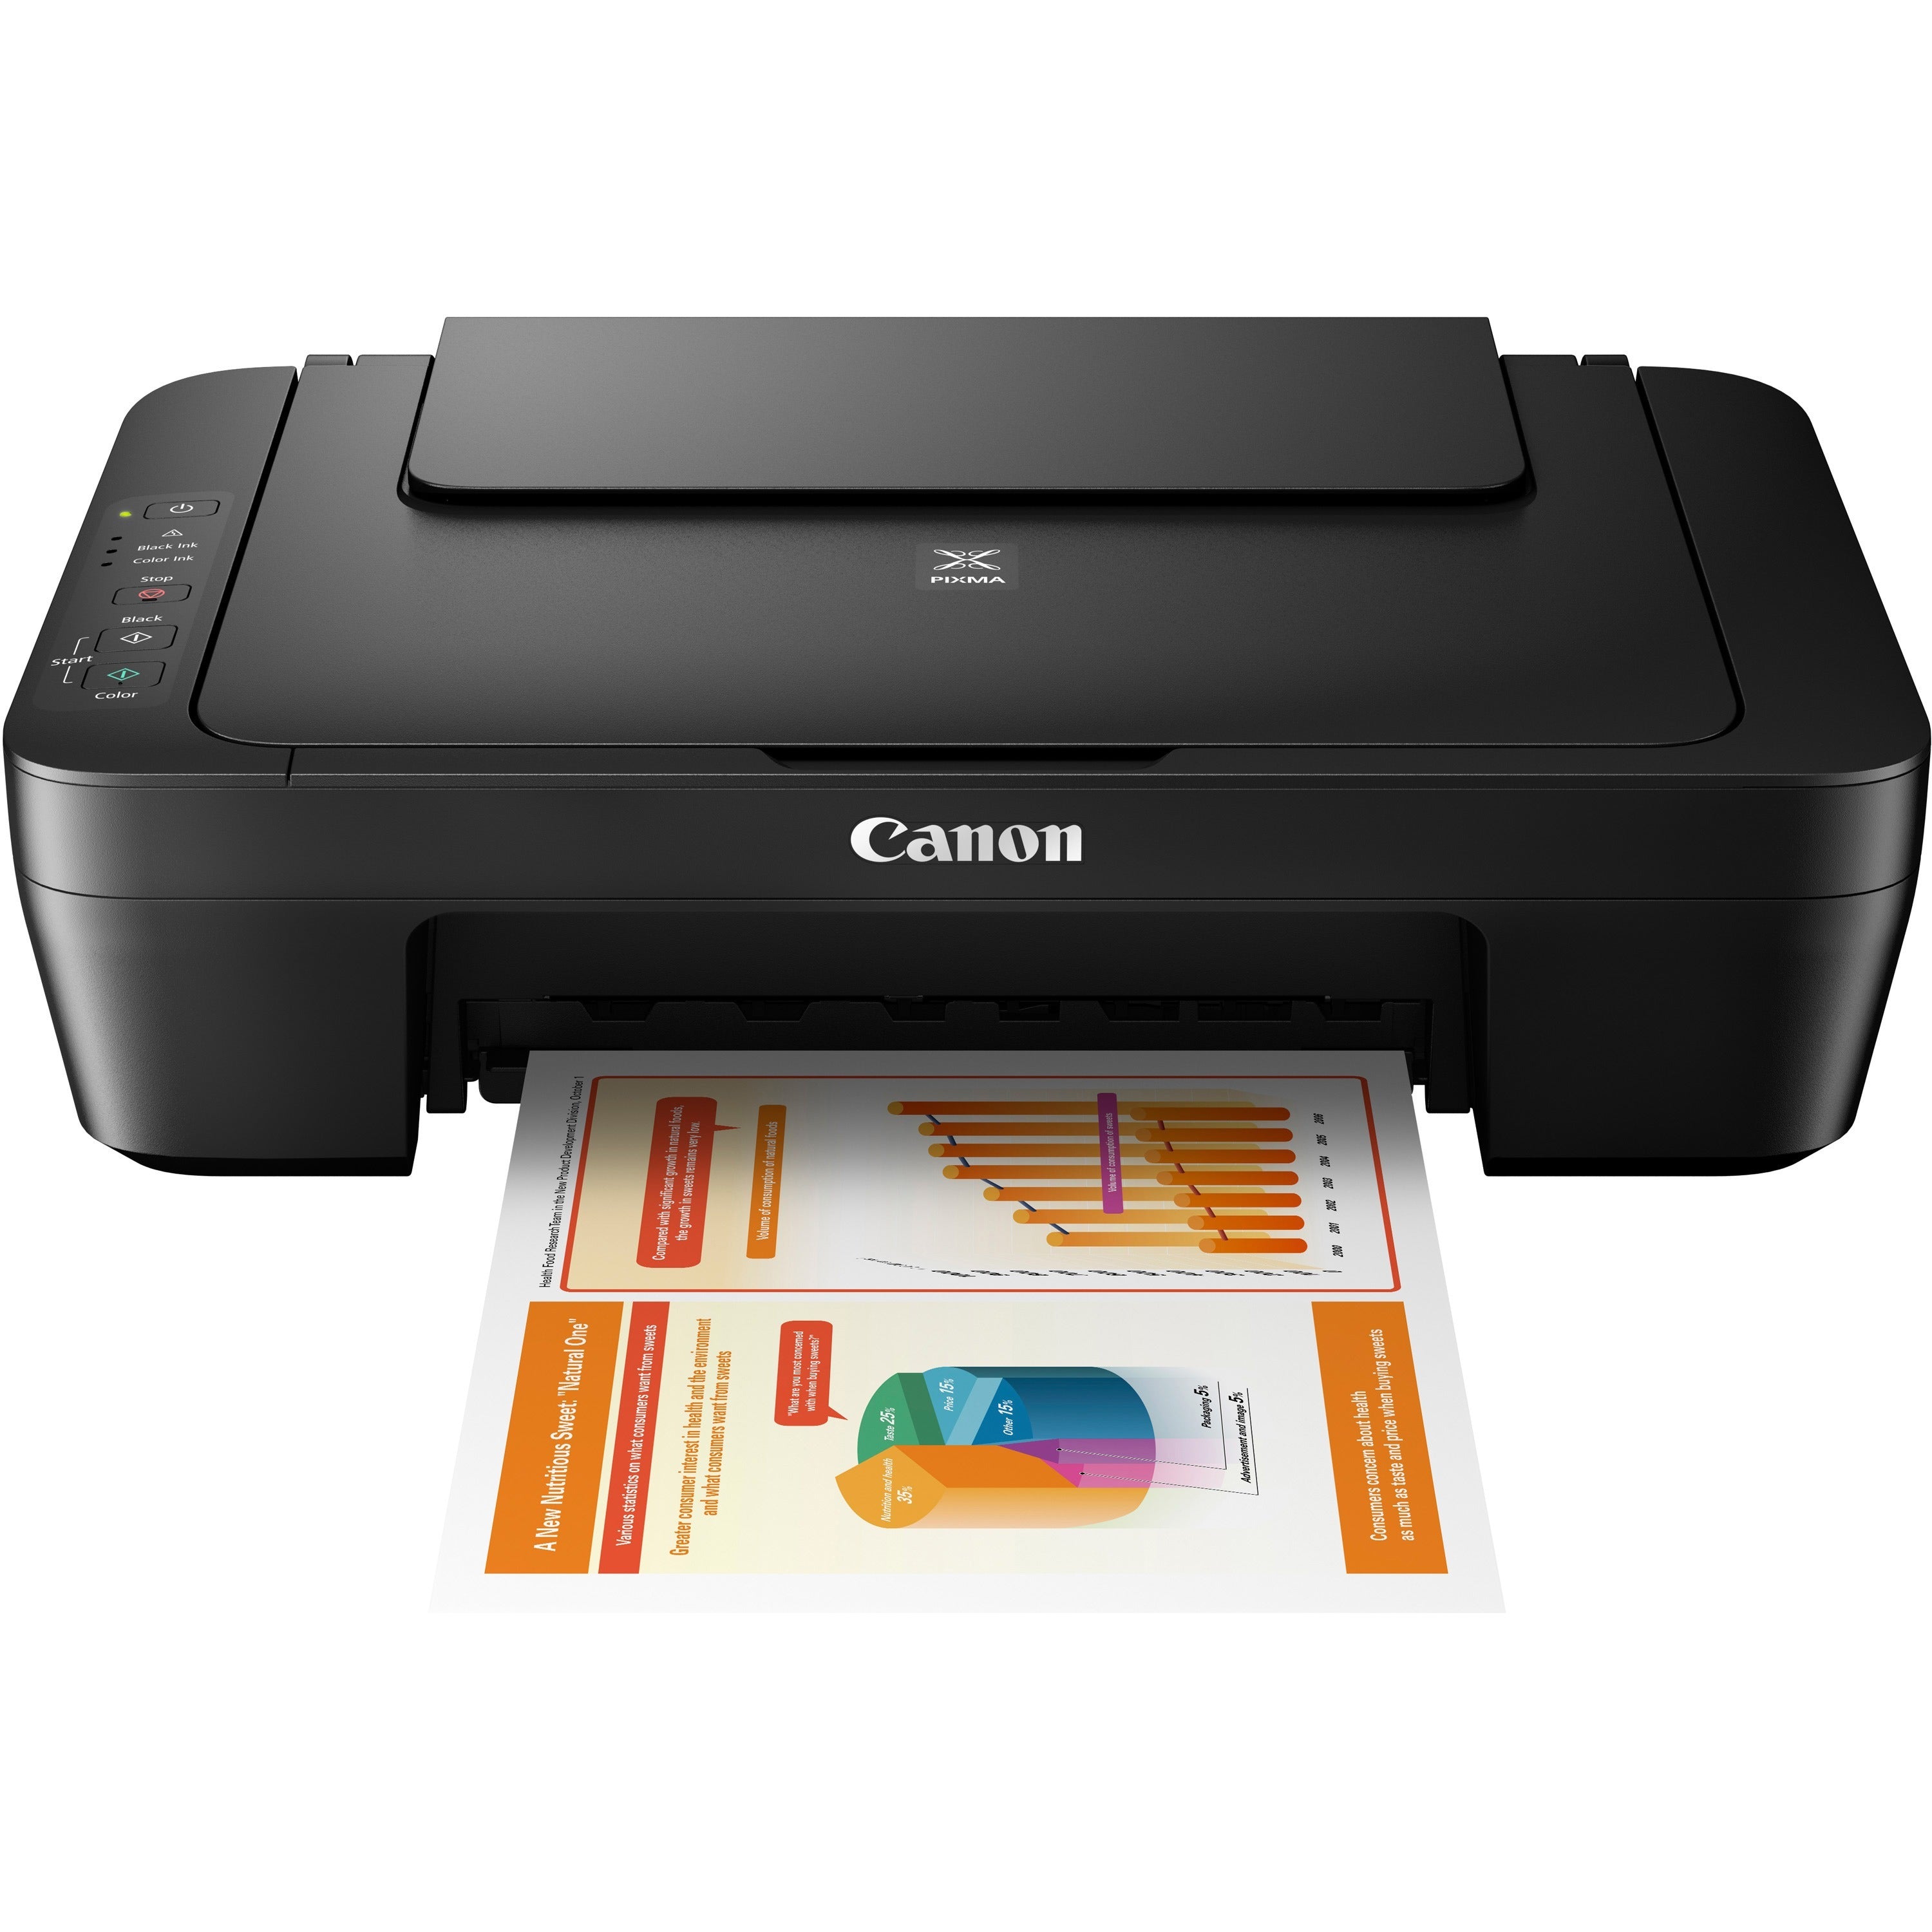 canon-pixma-mg2525bk-inkjet-multifunction-printer-color-black-copier-printer-scanner-4800-x-600-dpi-print-color-scanner-600-dpi-optical-scan-usb-1-each-for-plain-paper-print_cnmmg2525bk - 4